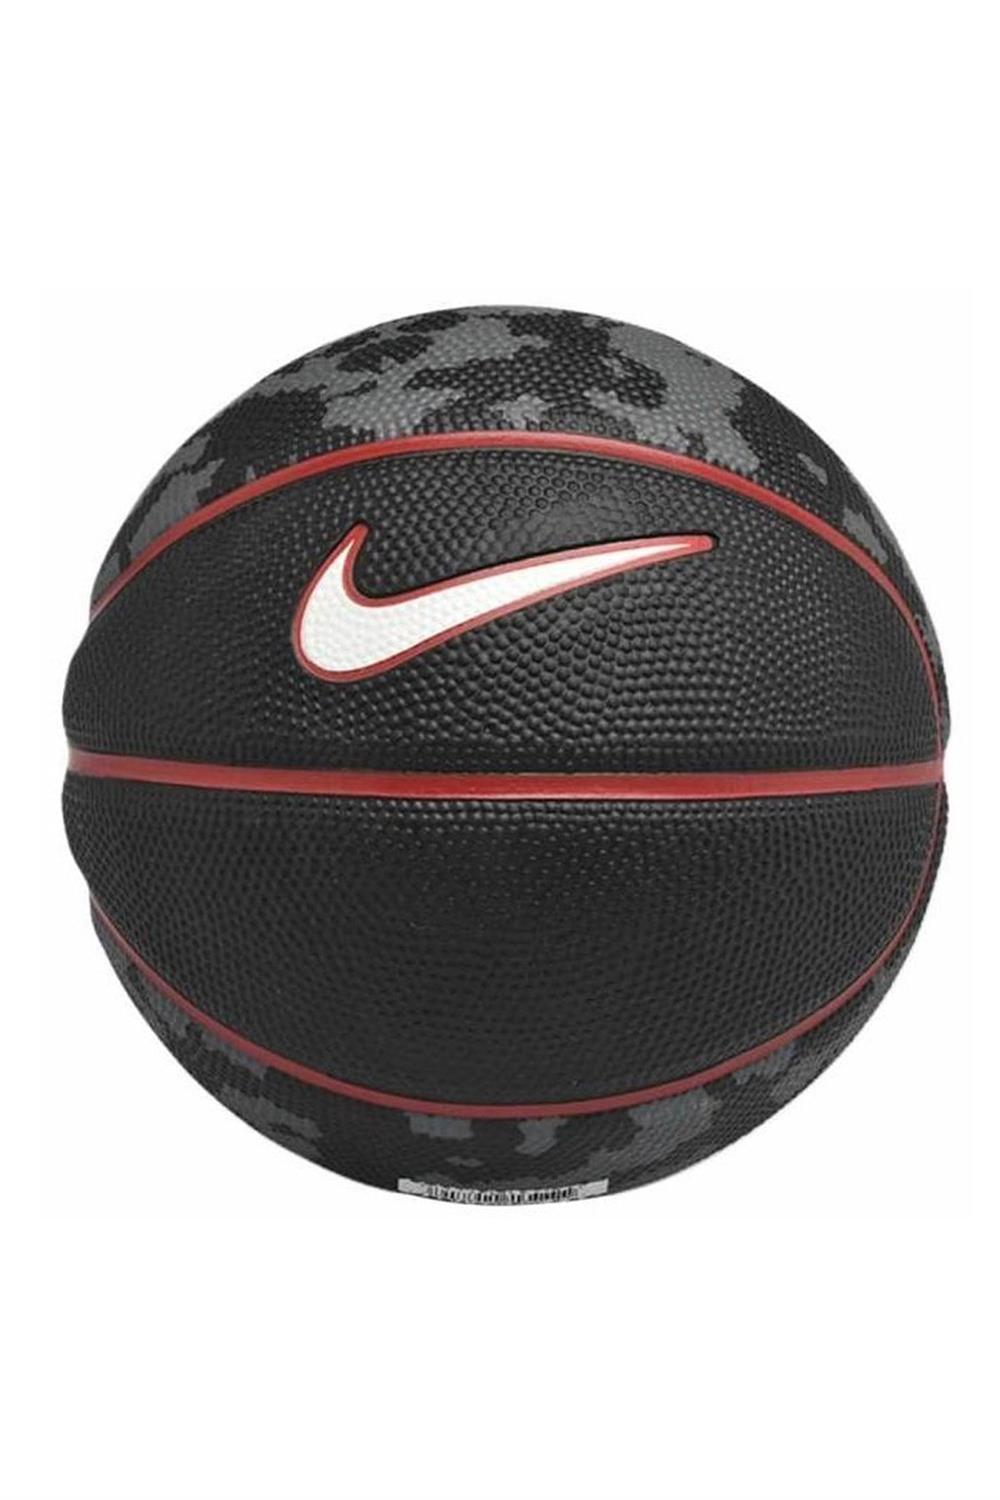 Nike Lebron Skills NBA Unisex Basketbol Topu N.000.3144.931.03 |  Sporborsasi.com